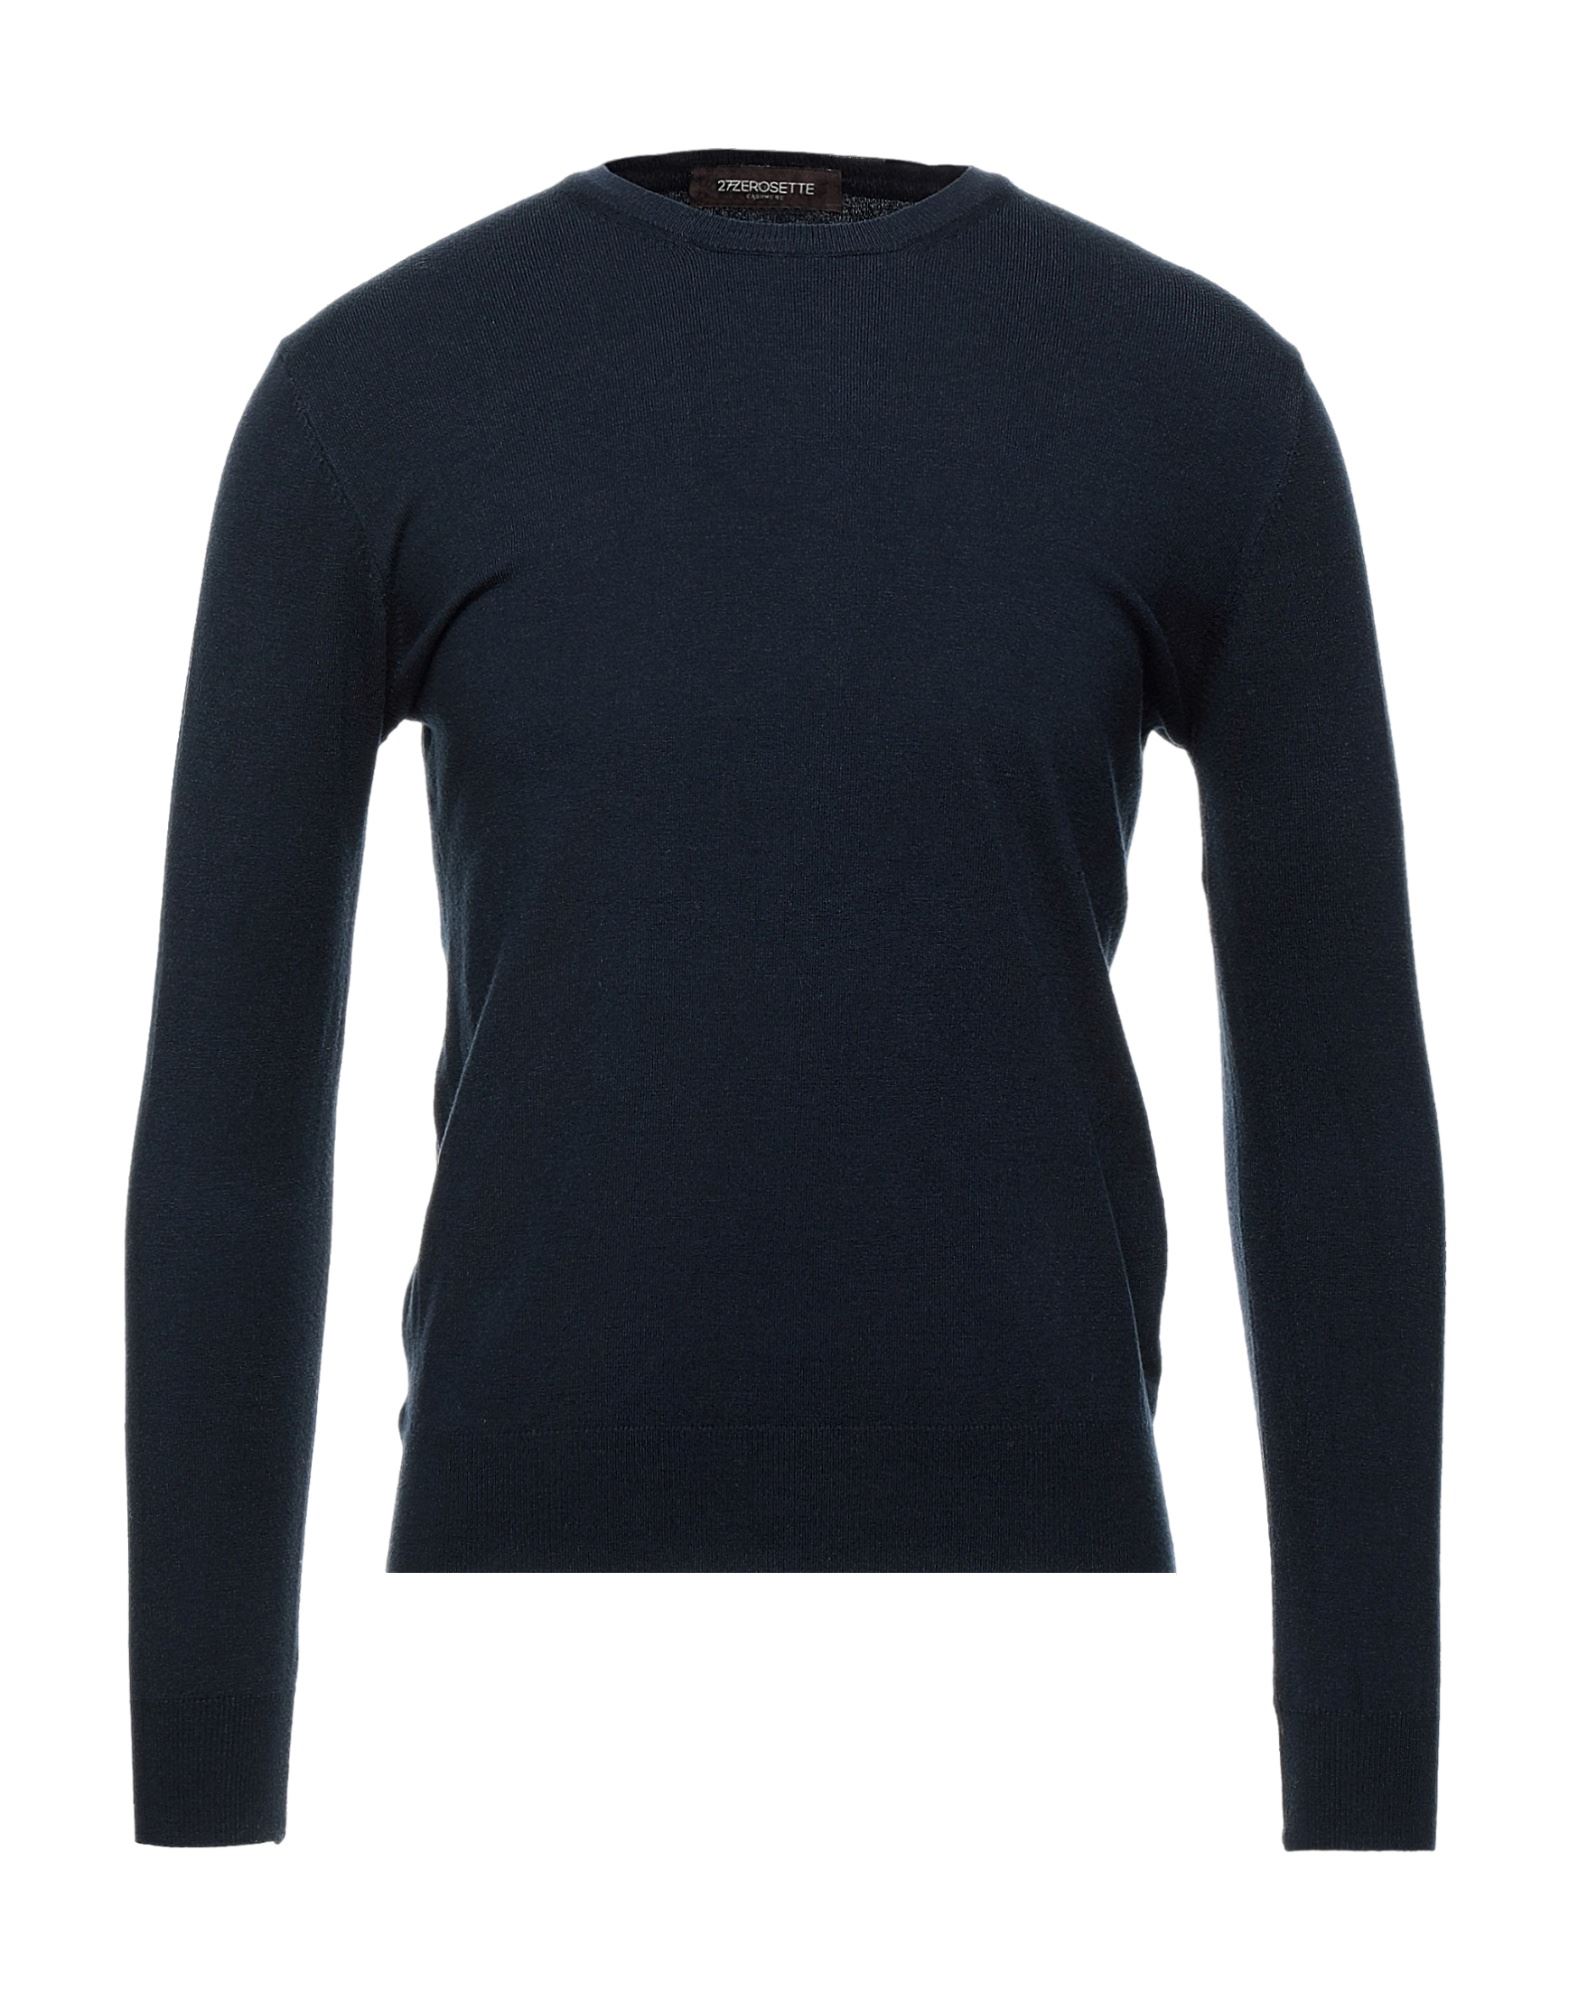 27zerosette Cashmere Sweaters In Dark Blue | ModeSens